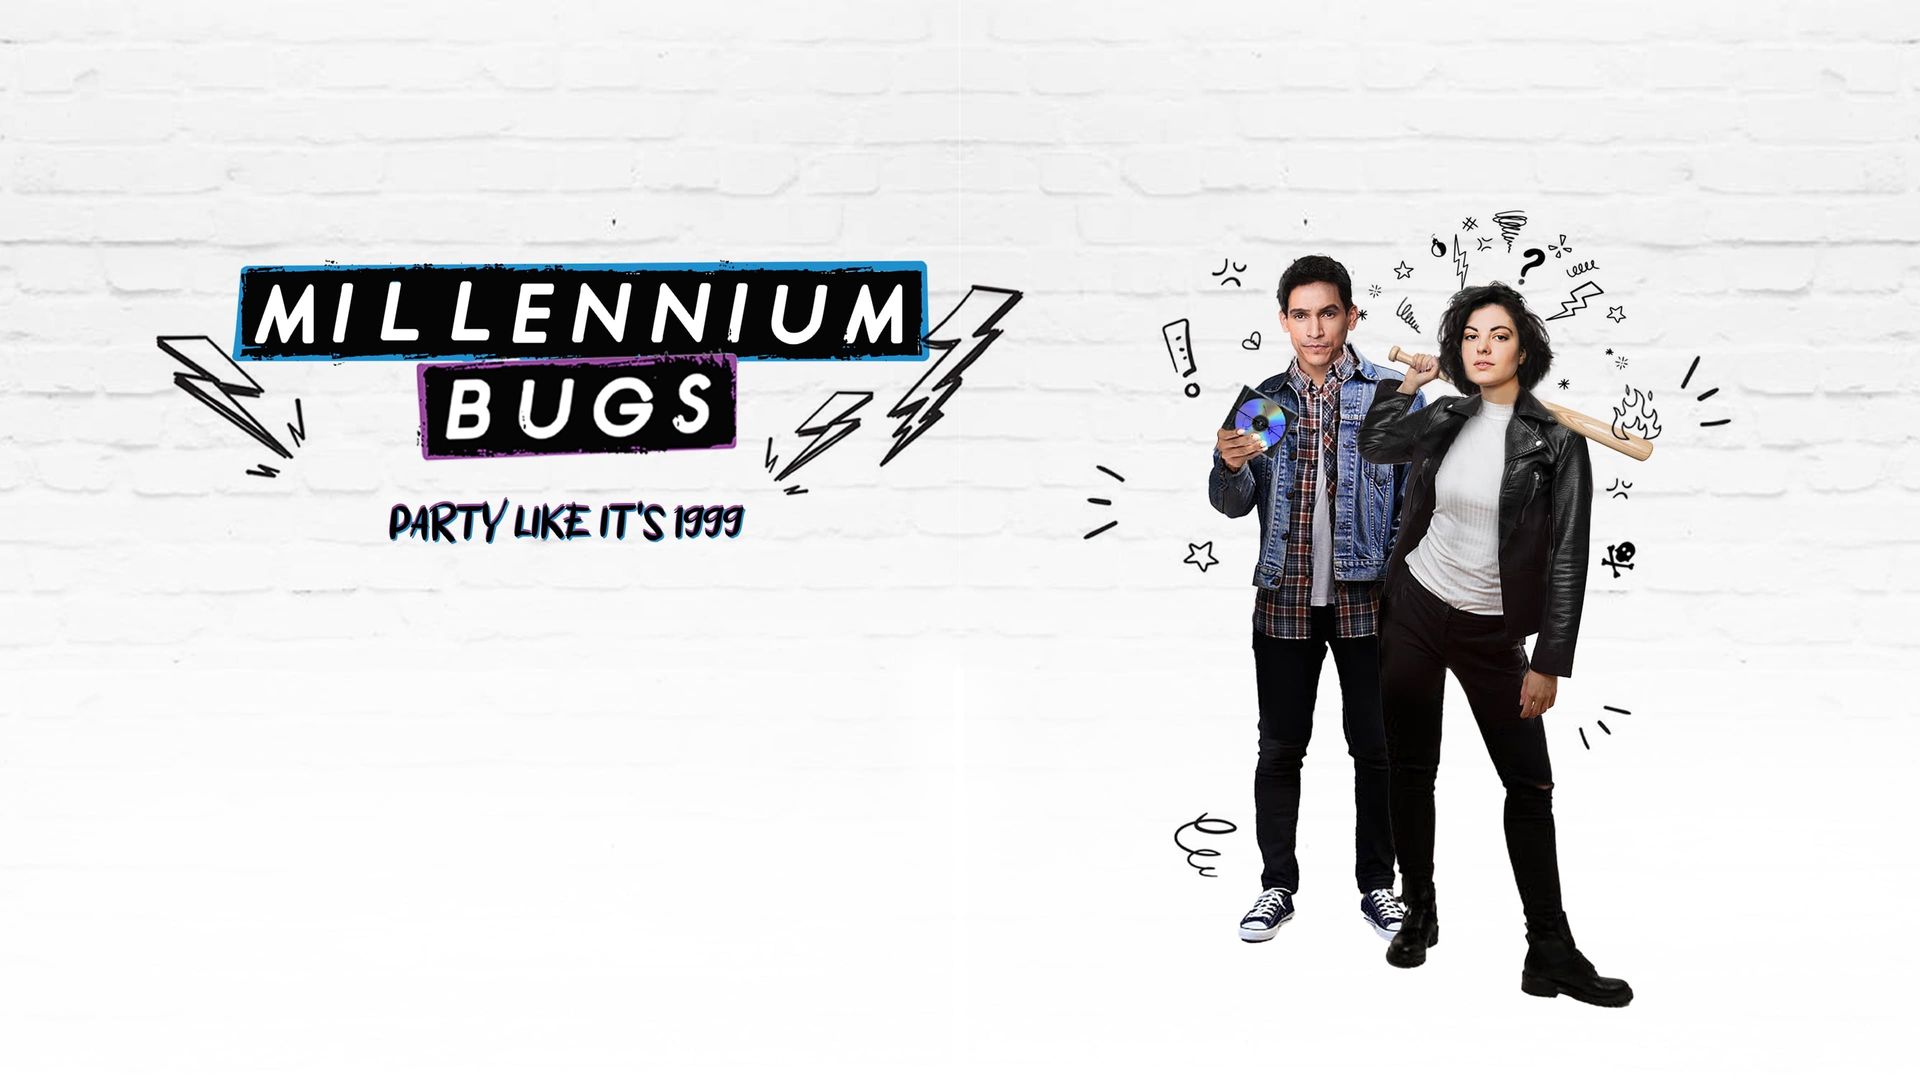 Millennium Bugs background